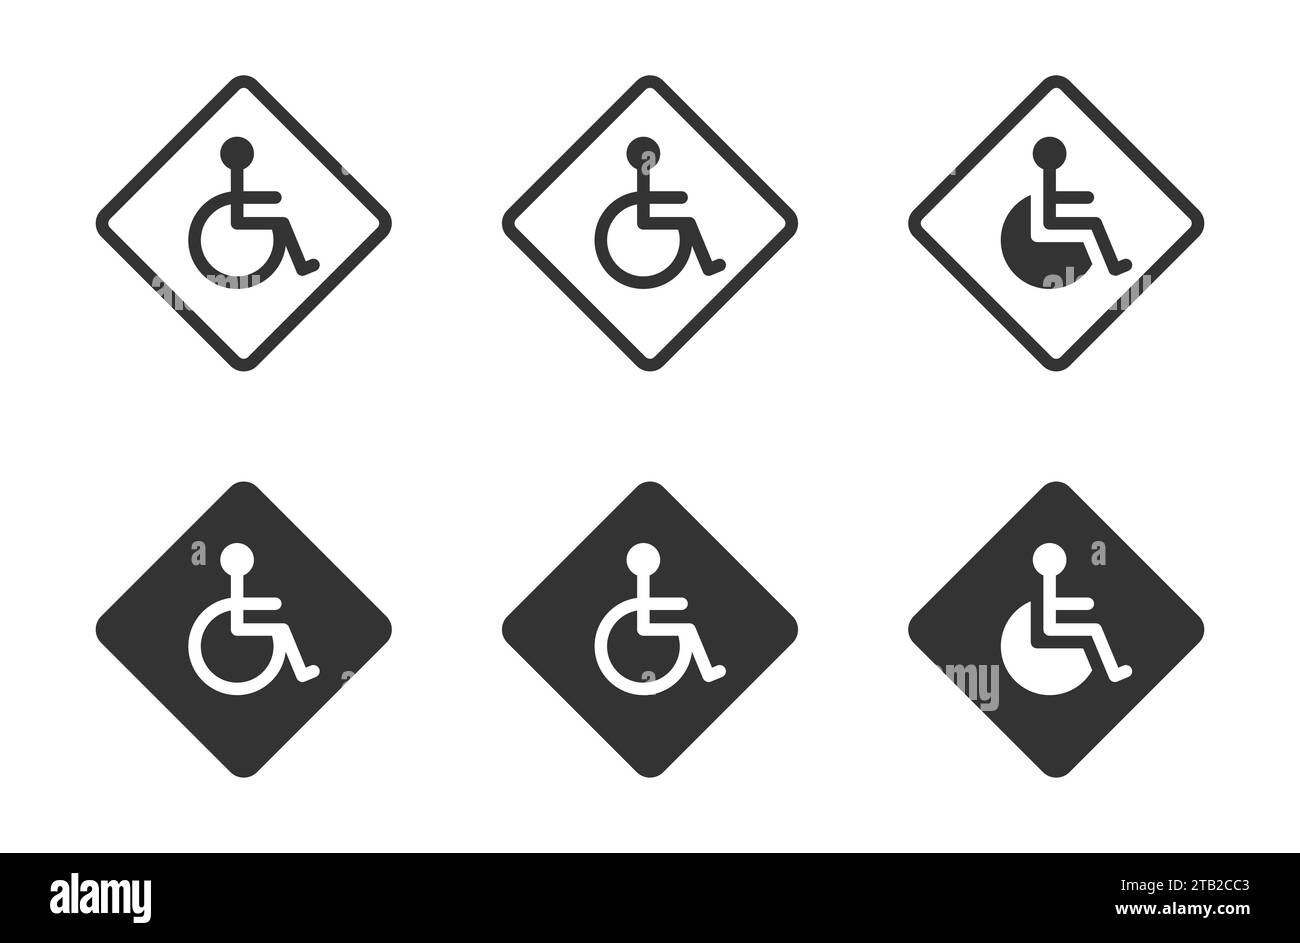 Wheelchair icons set. Vector illustration Stock Vector